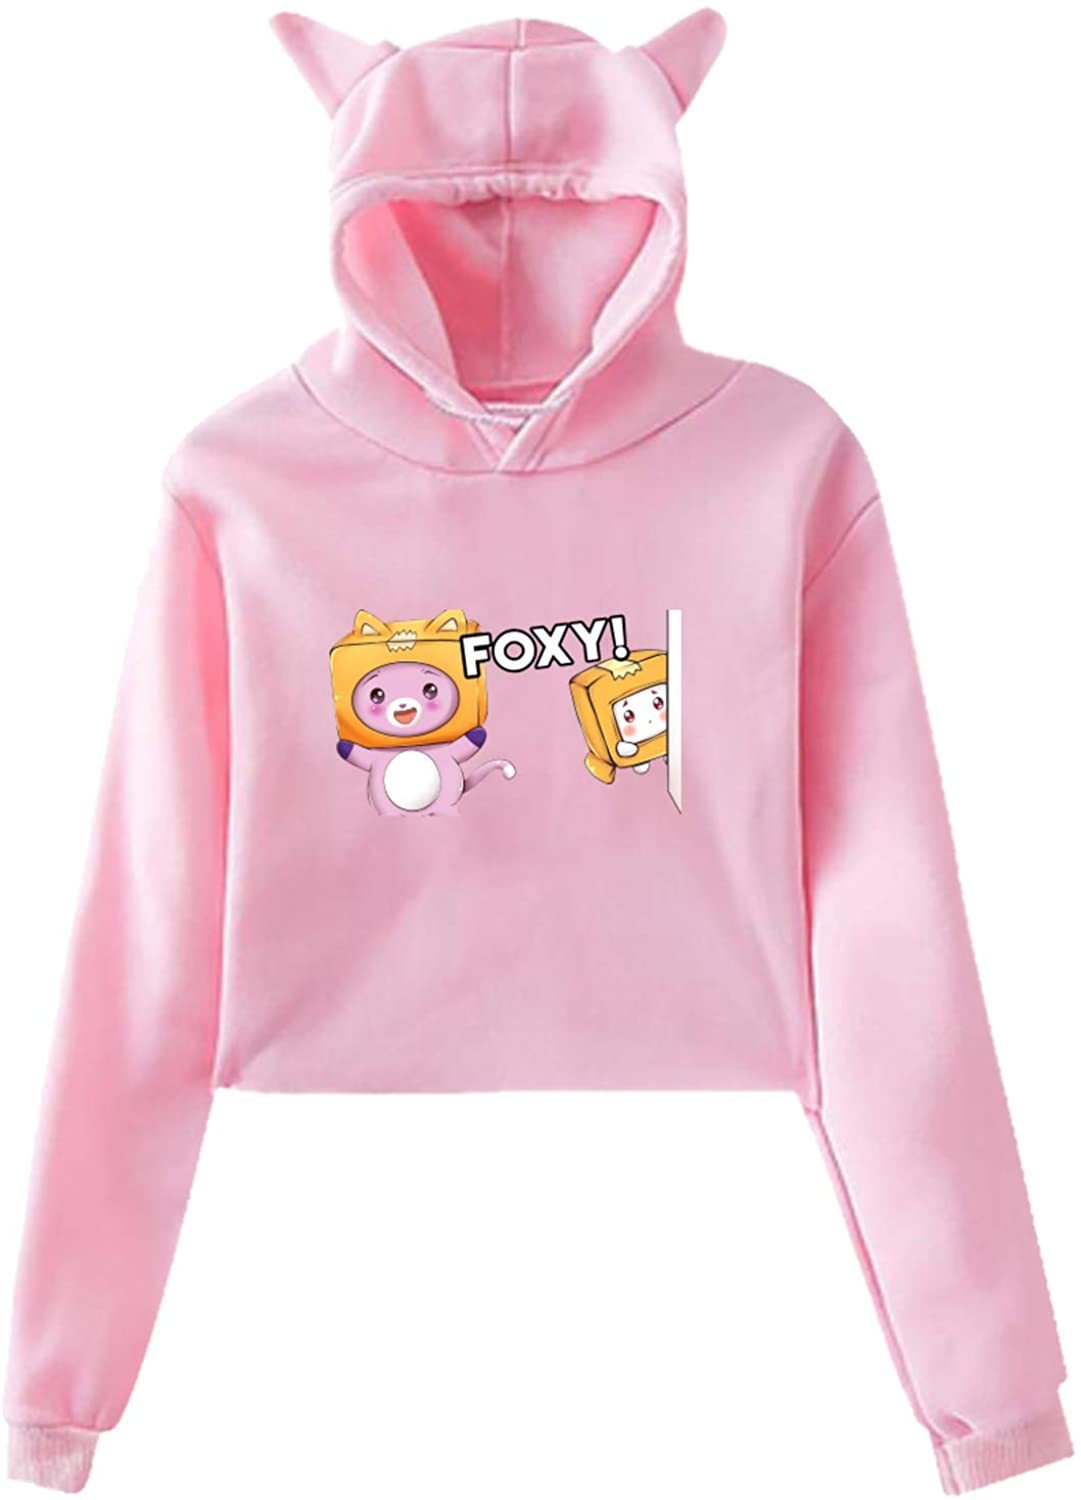 Preston-Playz Women Cat Ear Pullover Hoodie Long Sleeve Crop Tops Sweatshirt Jumper Pink